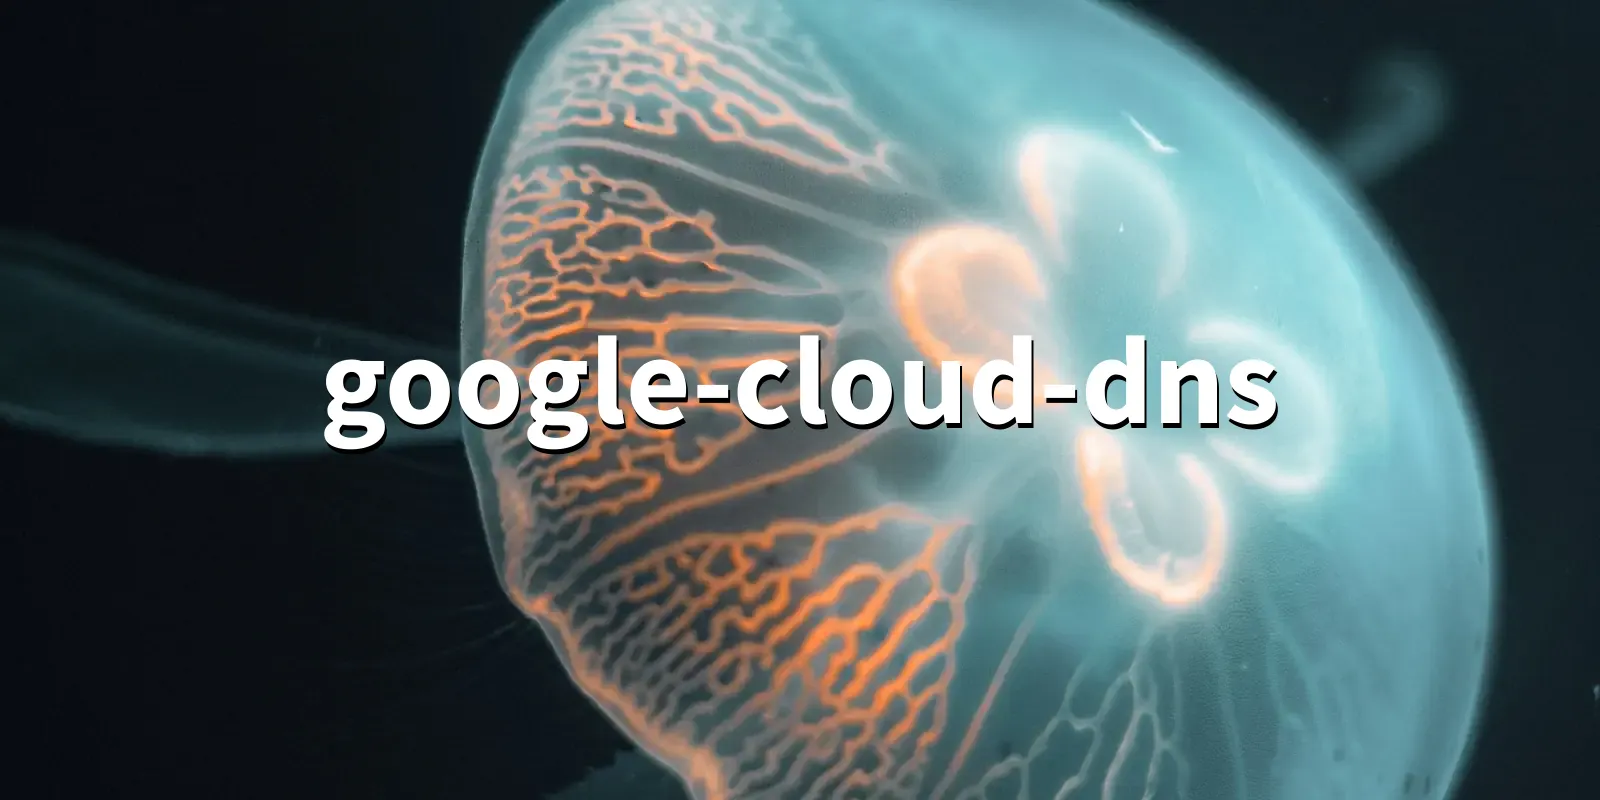 /pkg/g/google-cloud-dns/google-cloud-dns-banner.webp